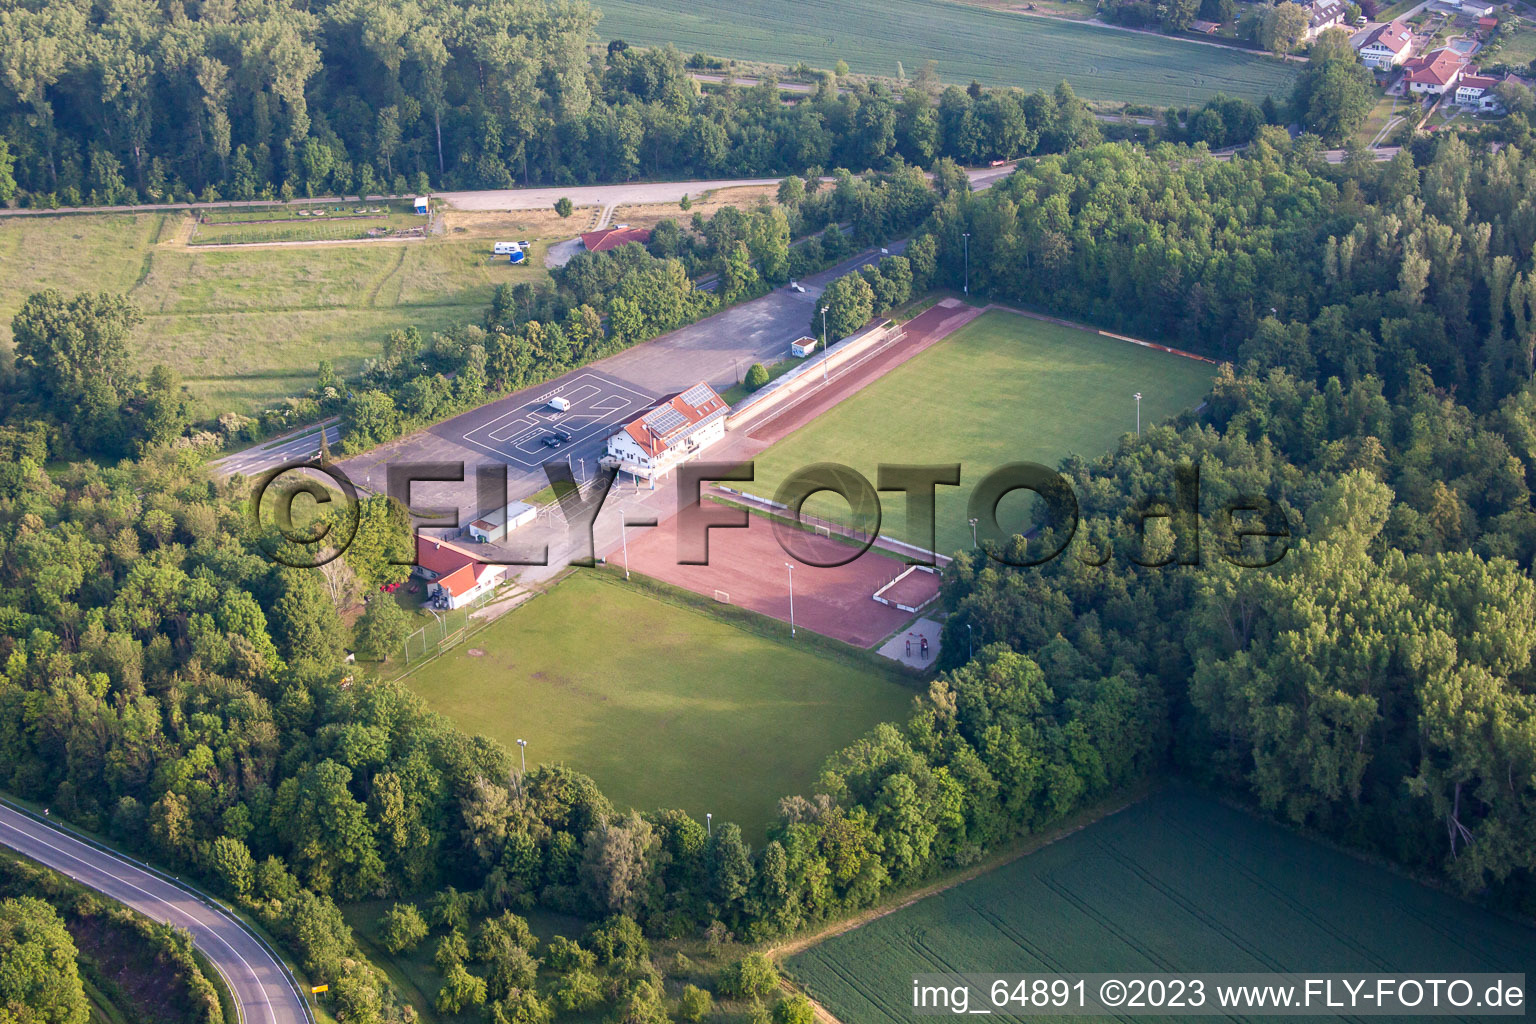 Aerial view of Playground VFR in the district Rheinsheim in Philippsburg in the state Baden-Wuerttemberg, Germany